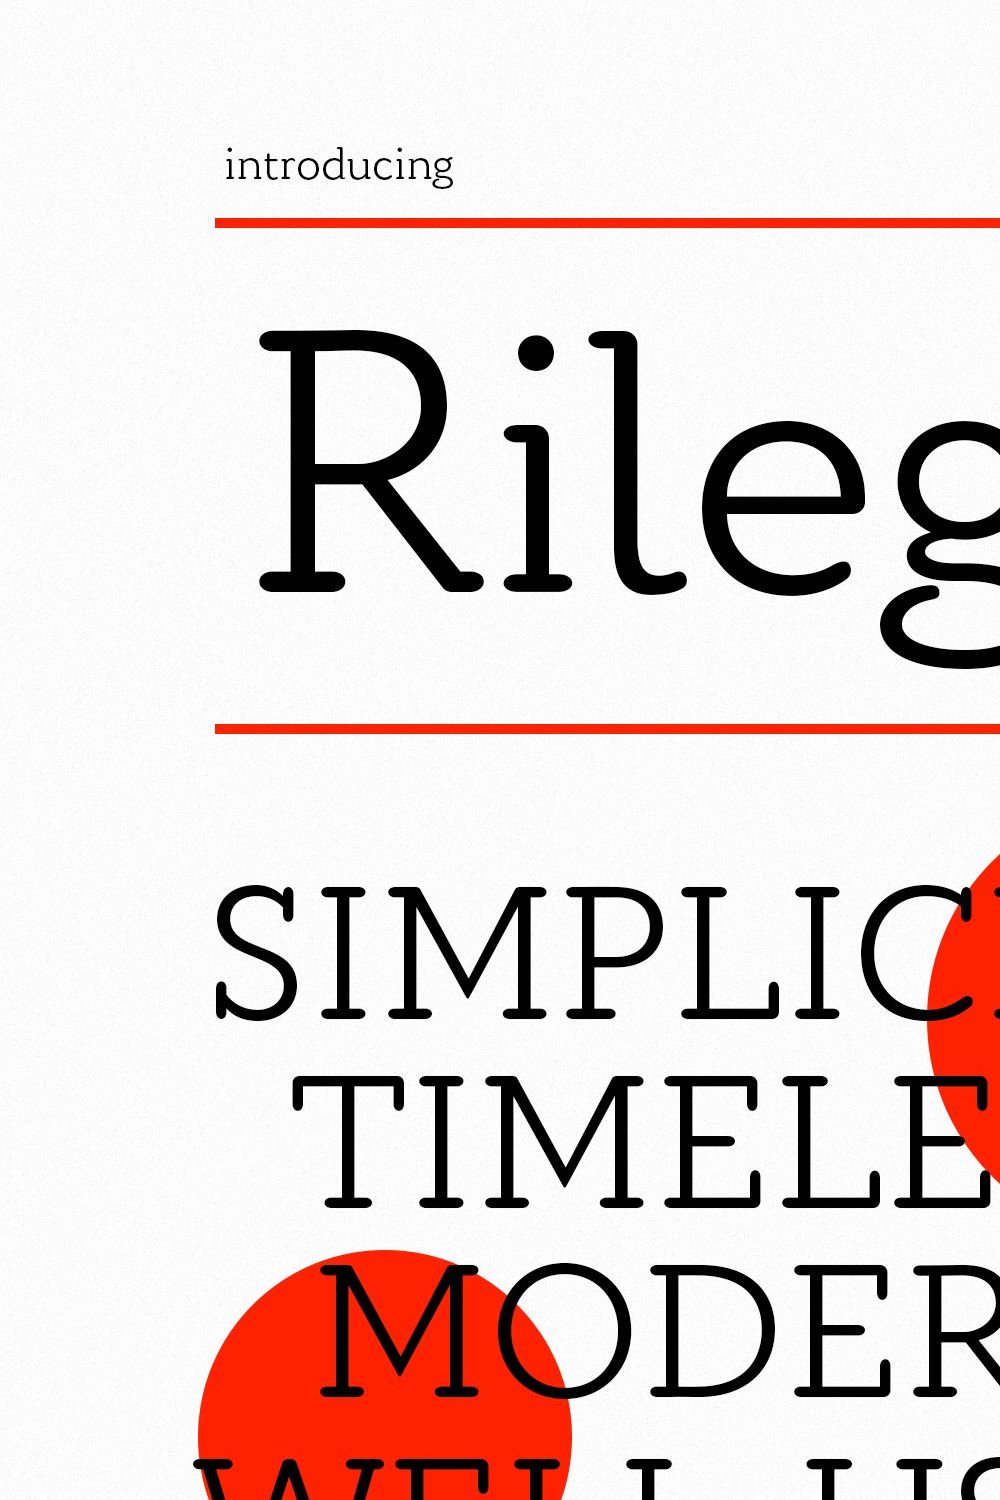 Rilego Serif Font pinterest preview image.